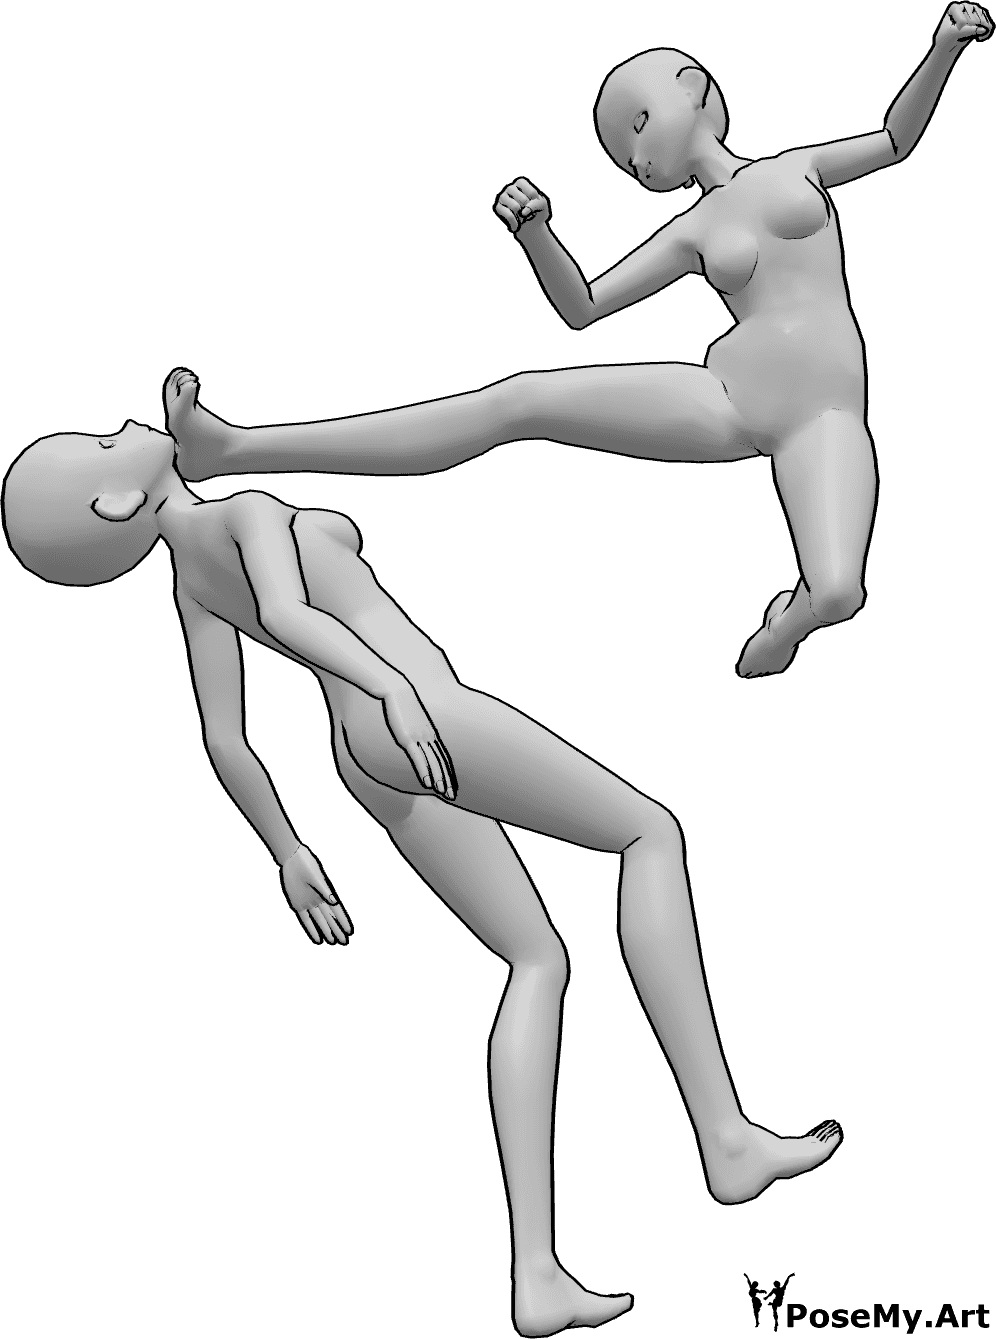 Referencia de poses- Anime femenino patadas pose - Hembras anime se pelean, una de ellas salta y patea a la otra hembra en la cabeza